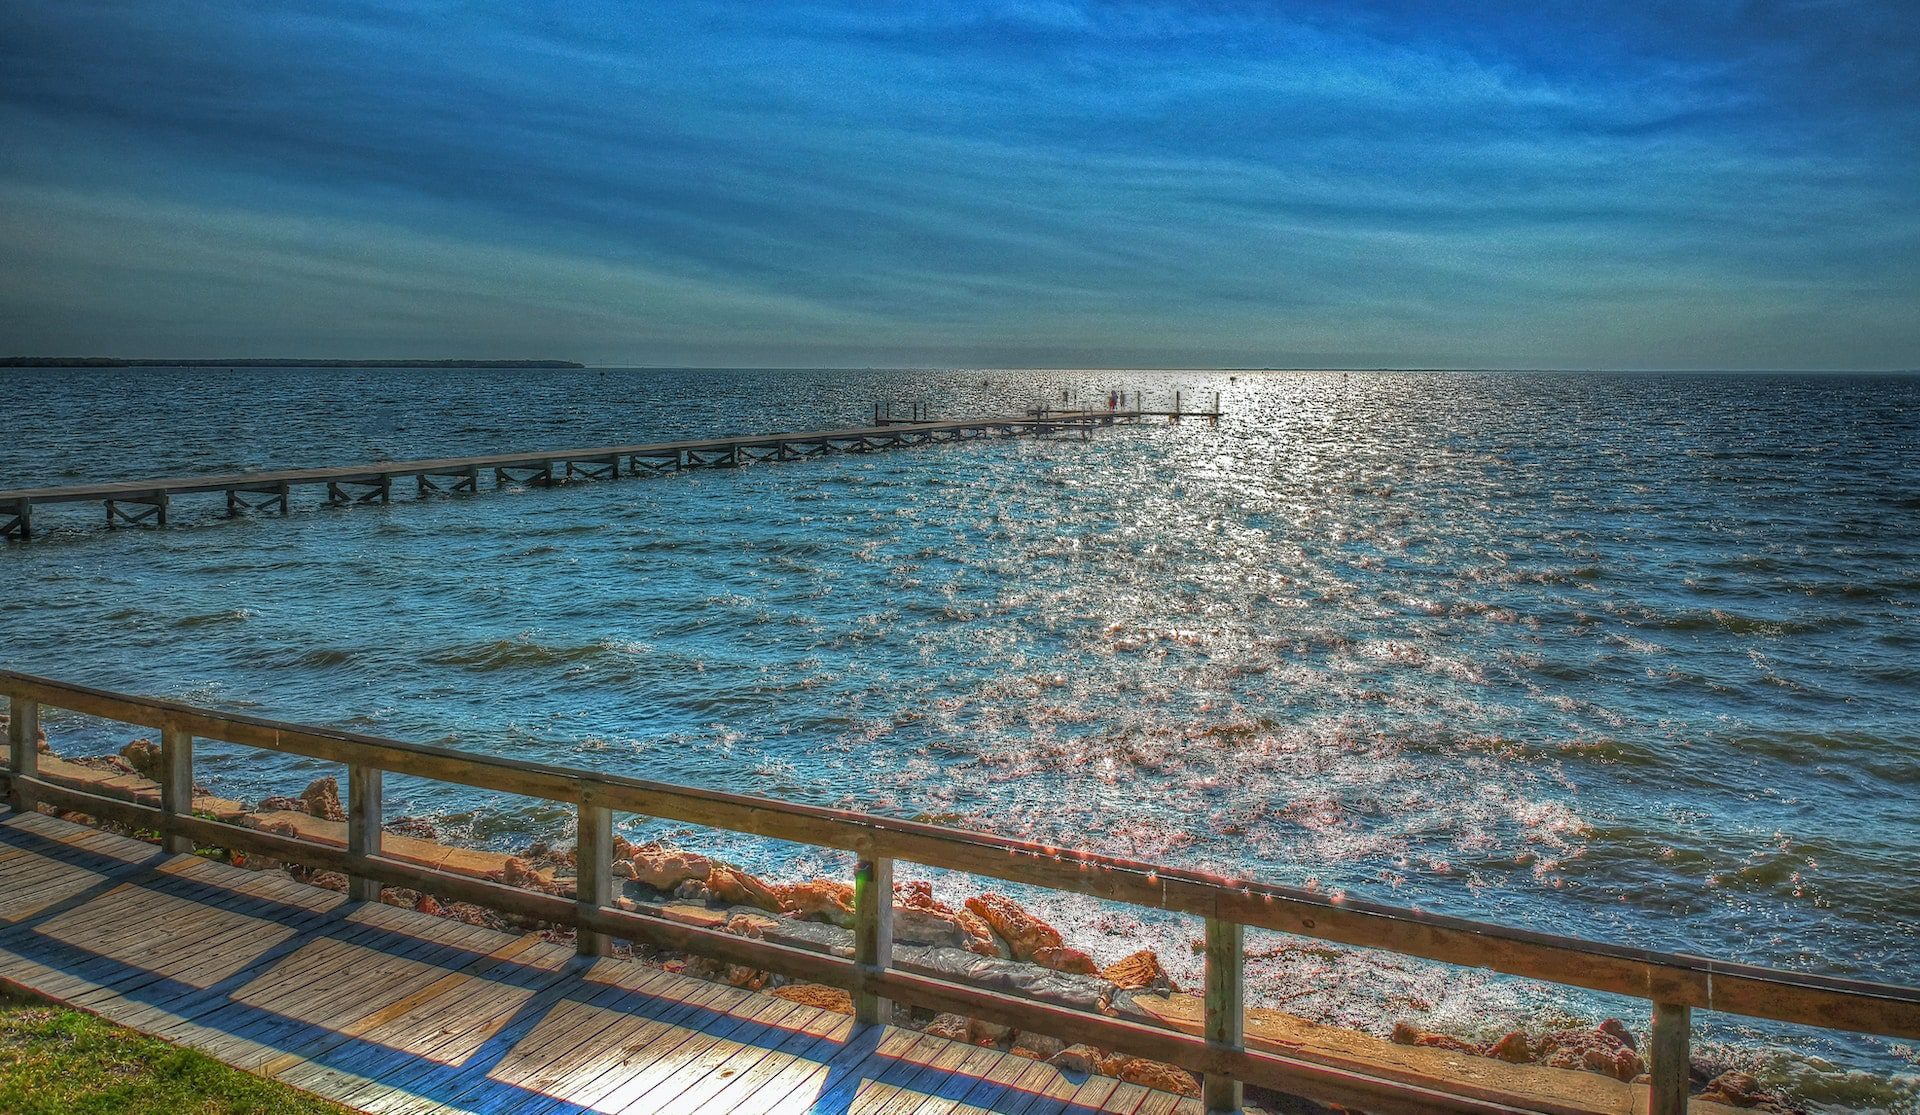 Blue sea under a blue sky in Ruskin, Florida.